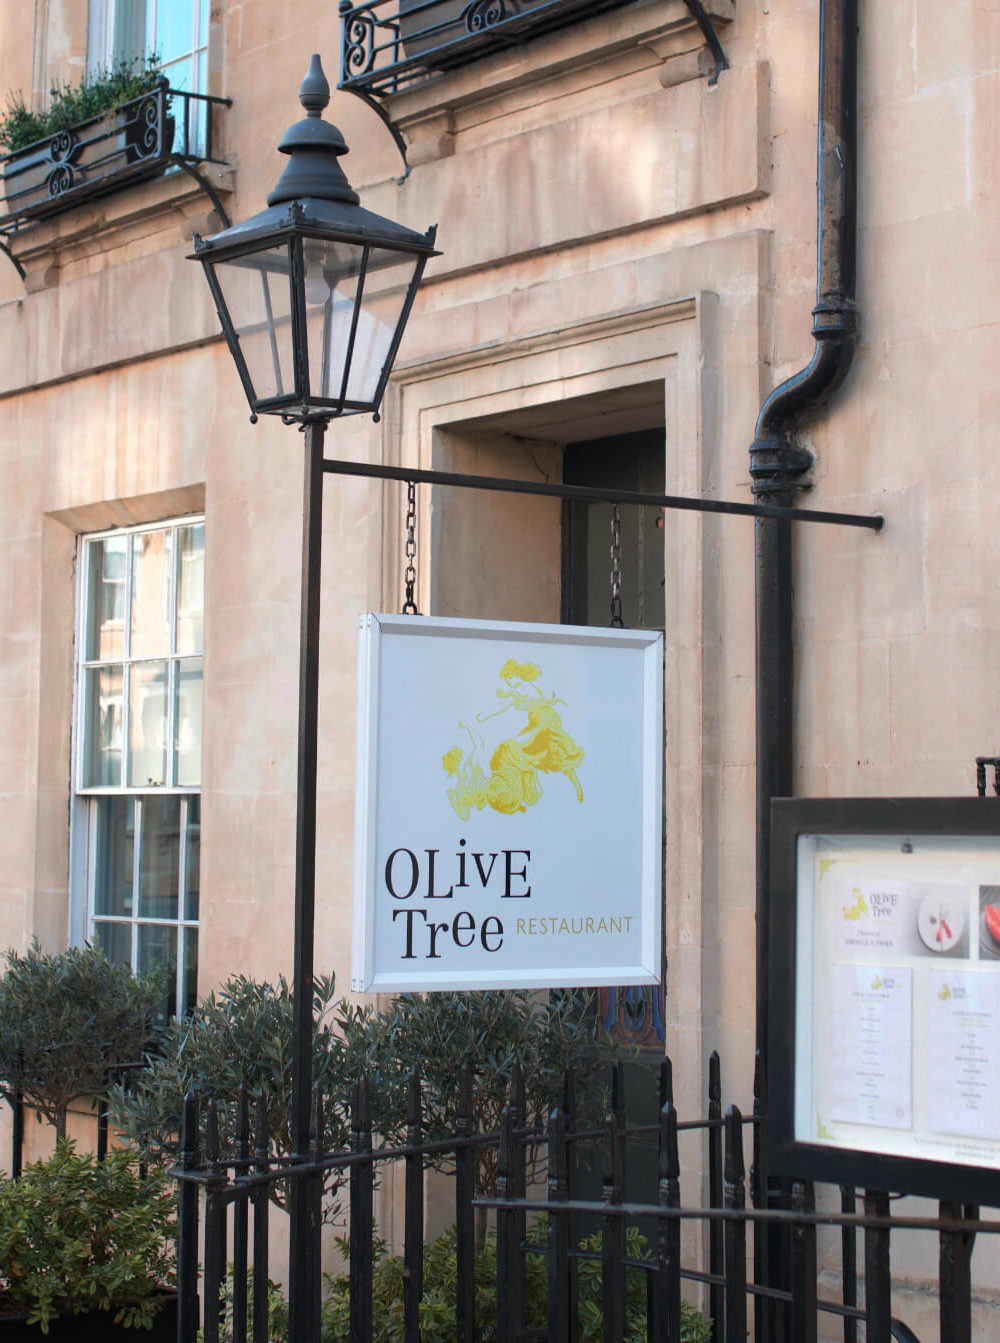 Olive Tree Restaurant Bath